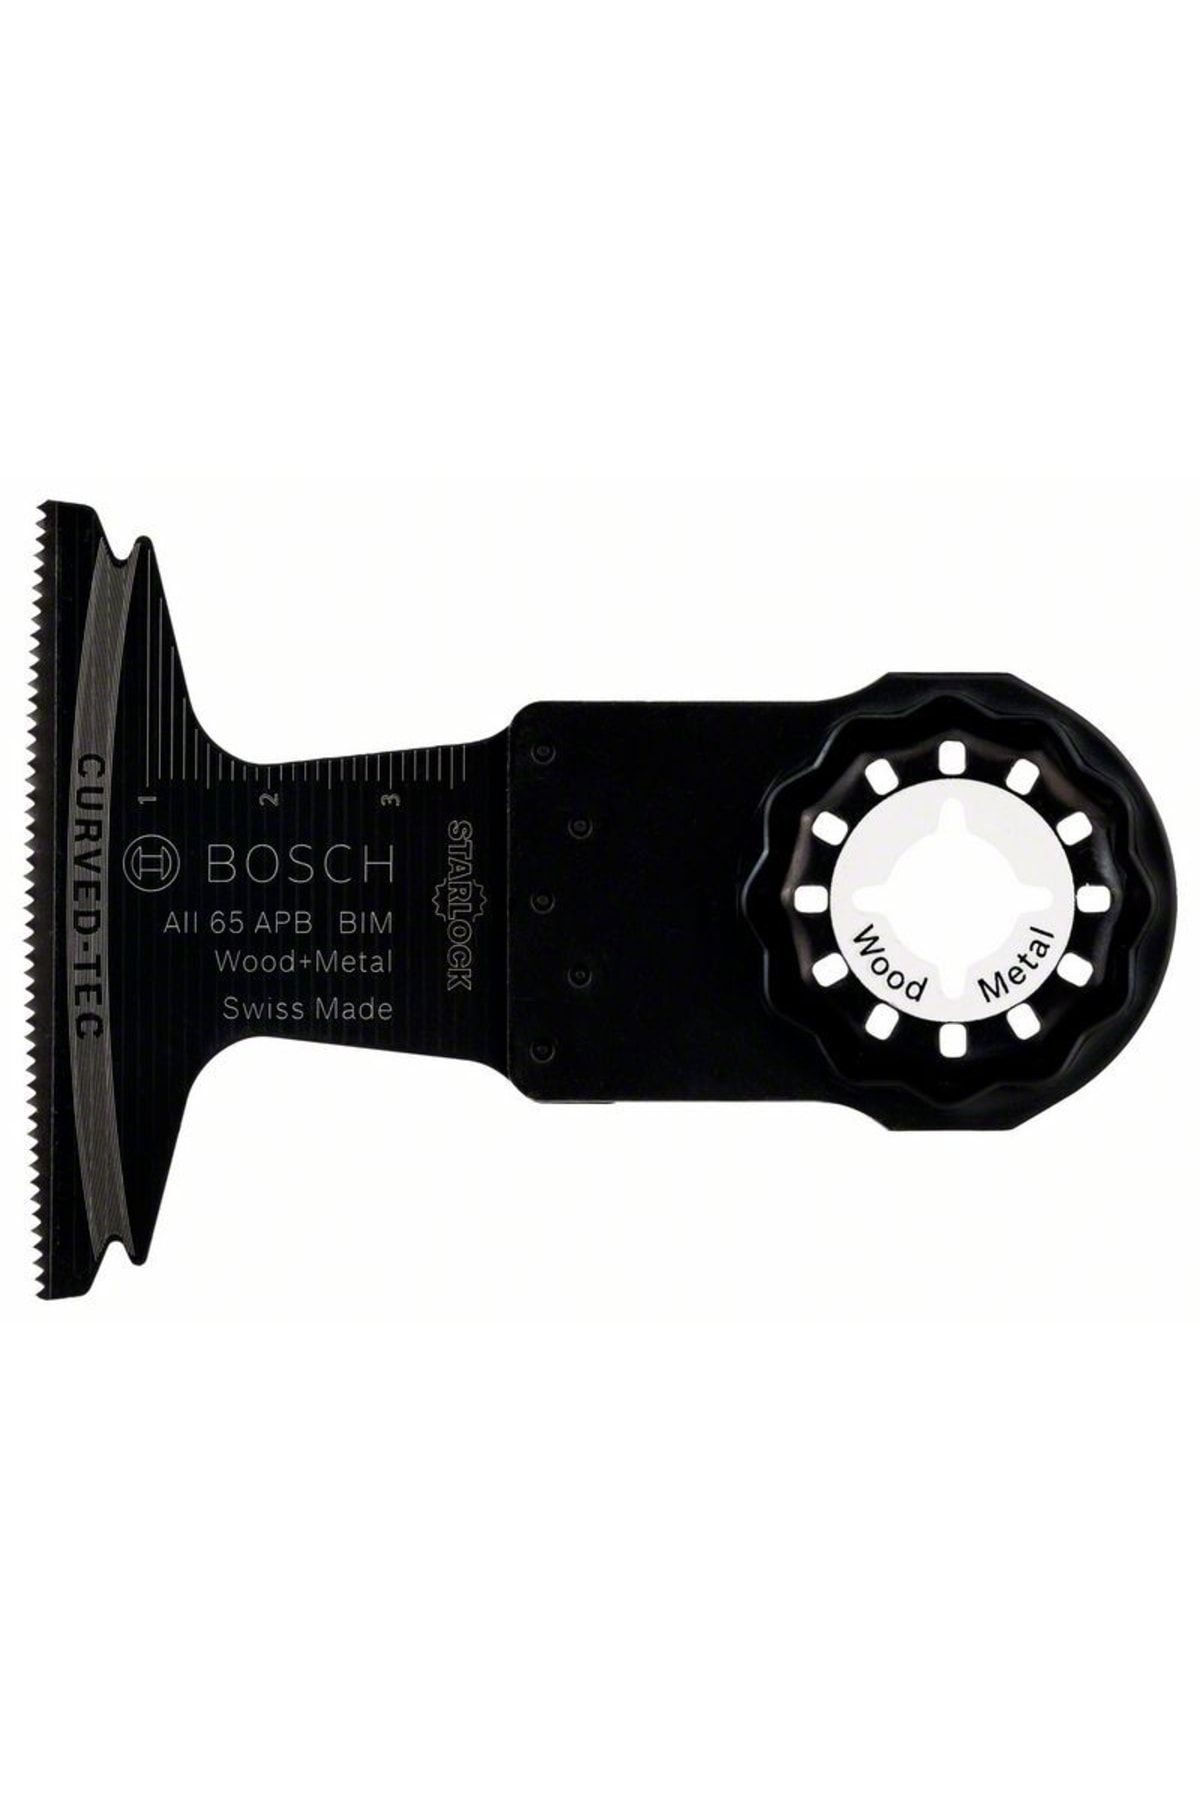 Bosch Aıı 65 apb ahşap-metal için Raspa Bıçağı (2608661907)